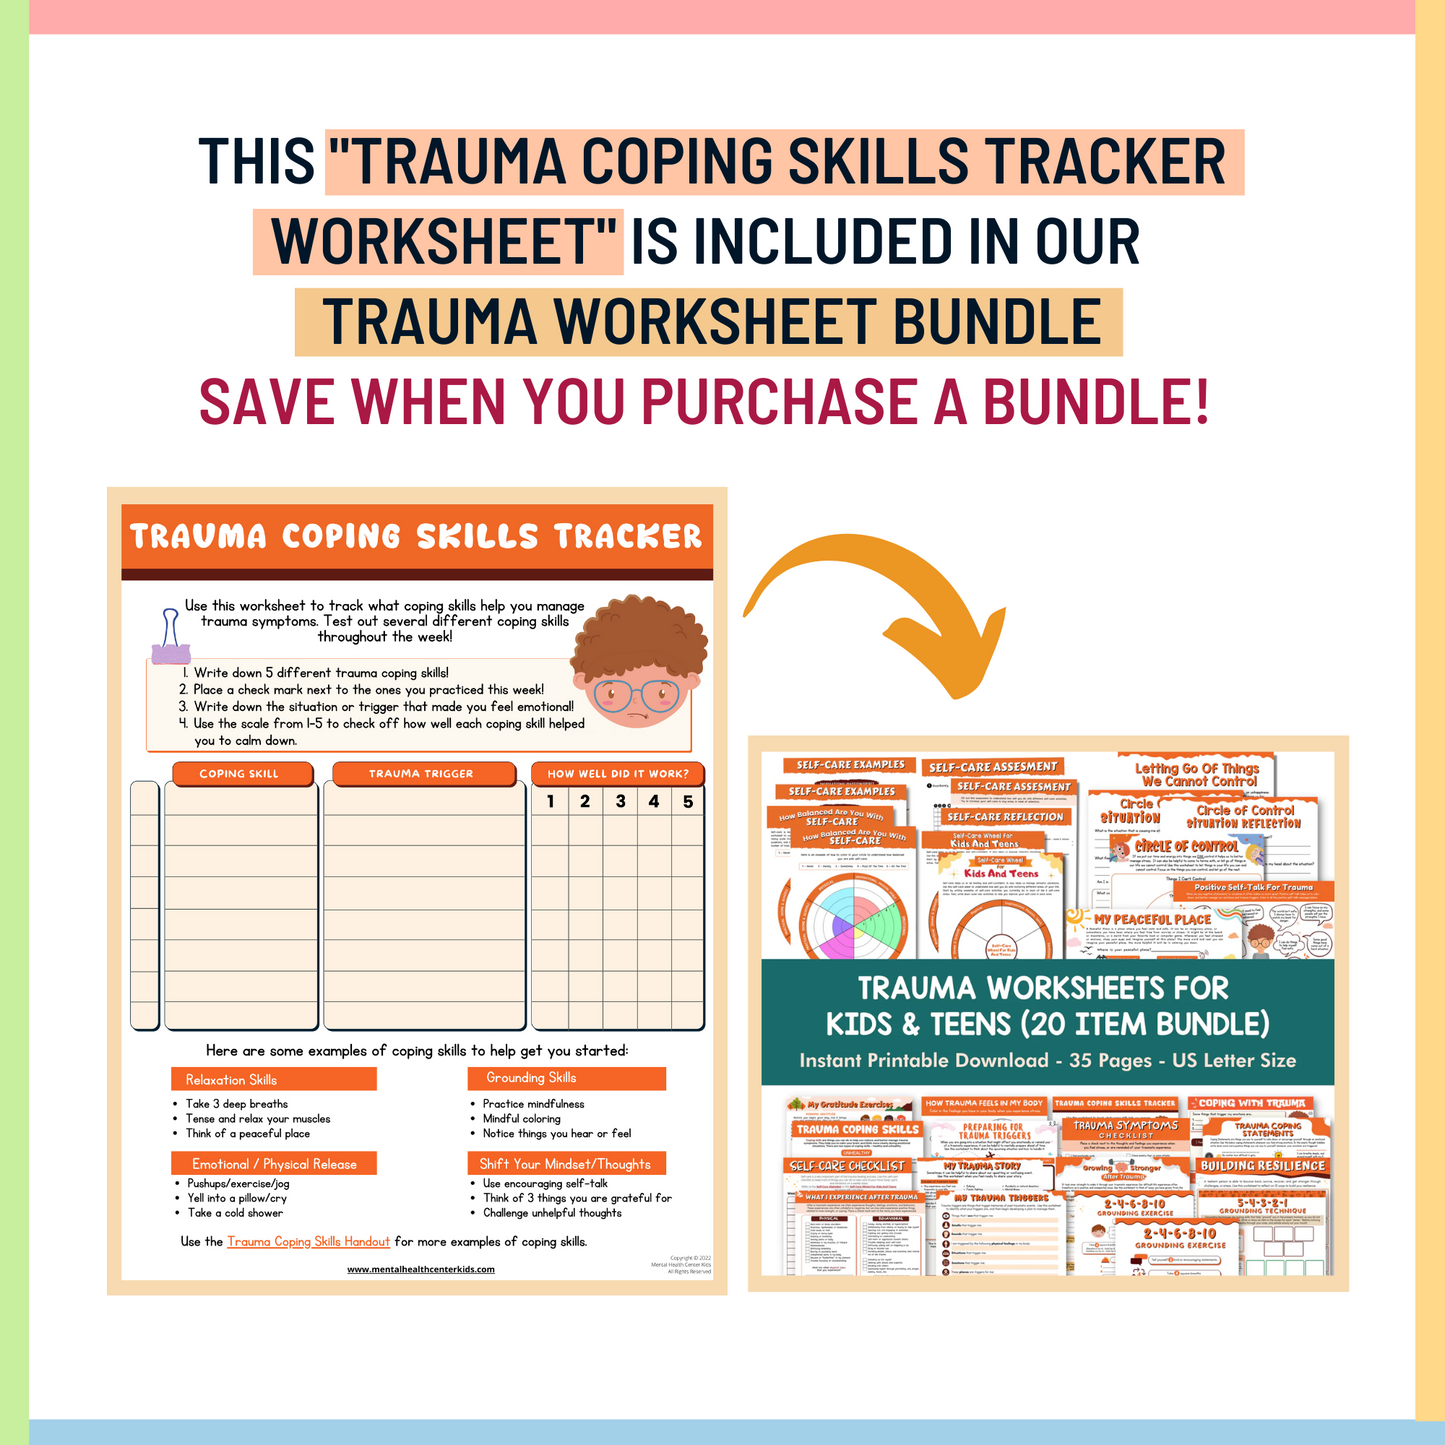 Trauma Management Strategies Tracker